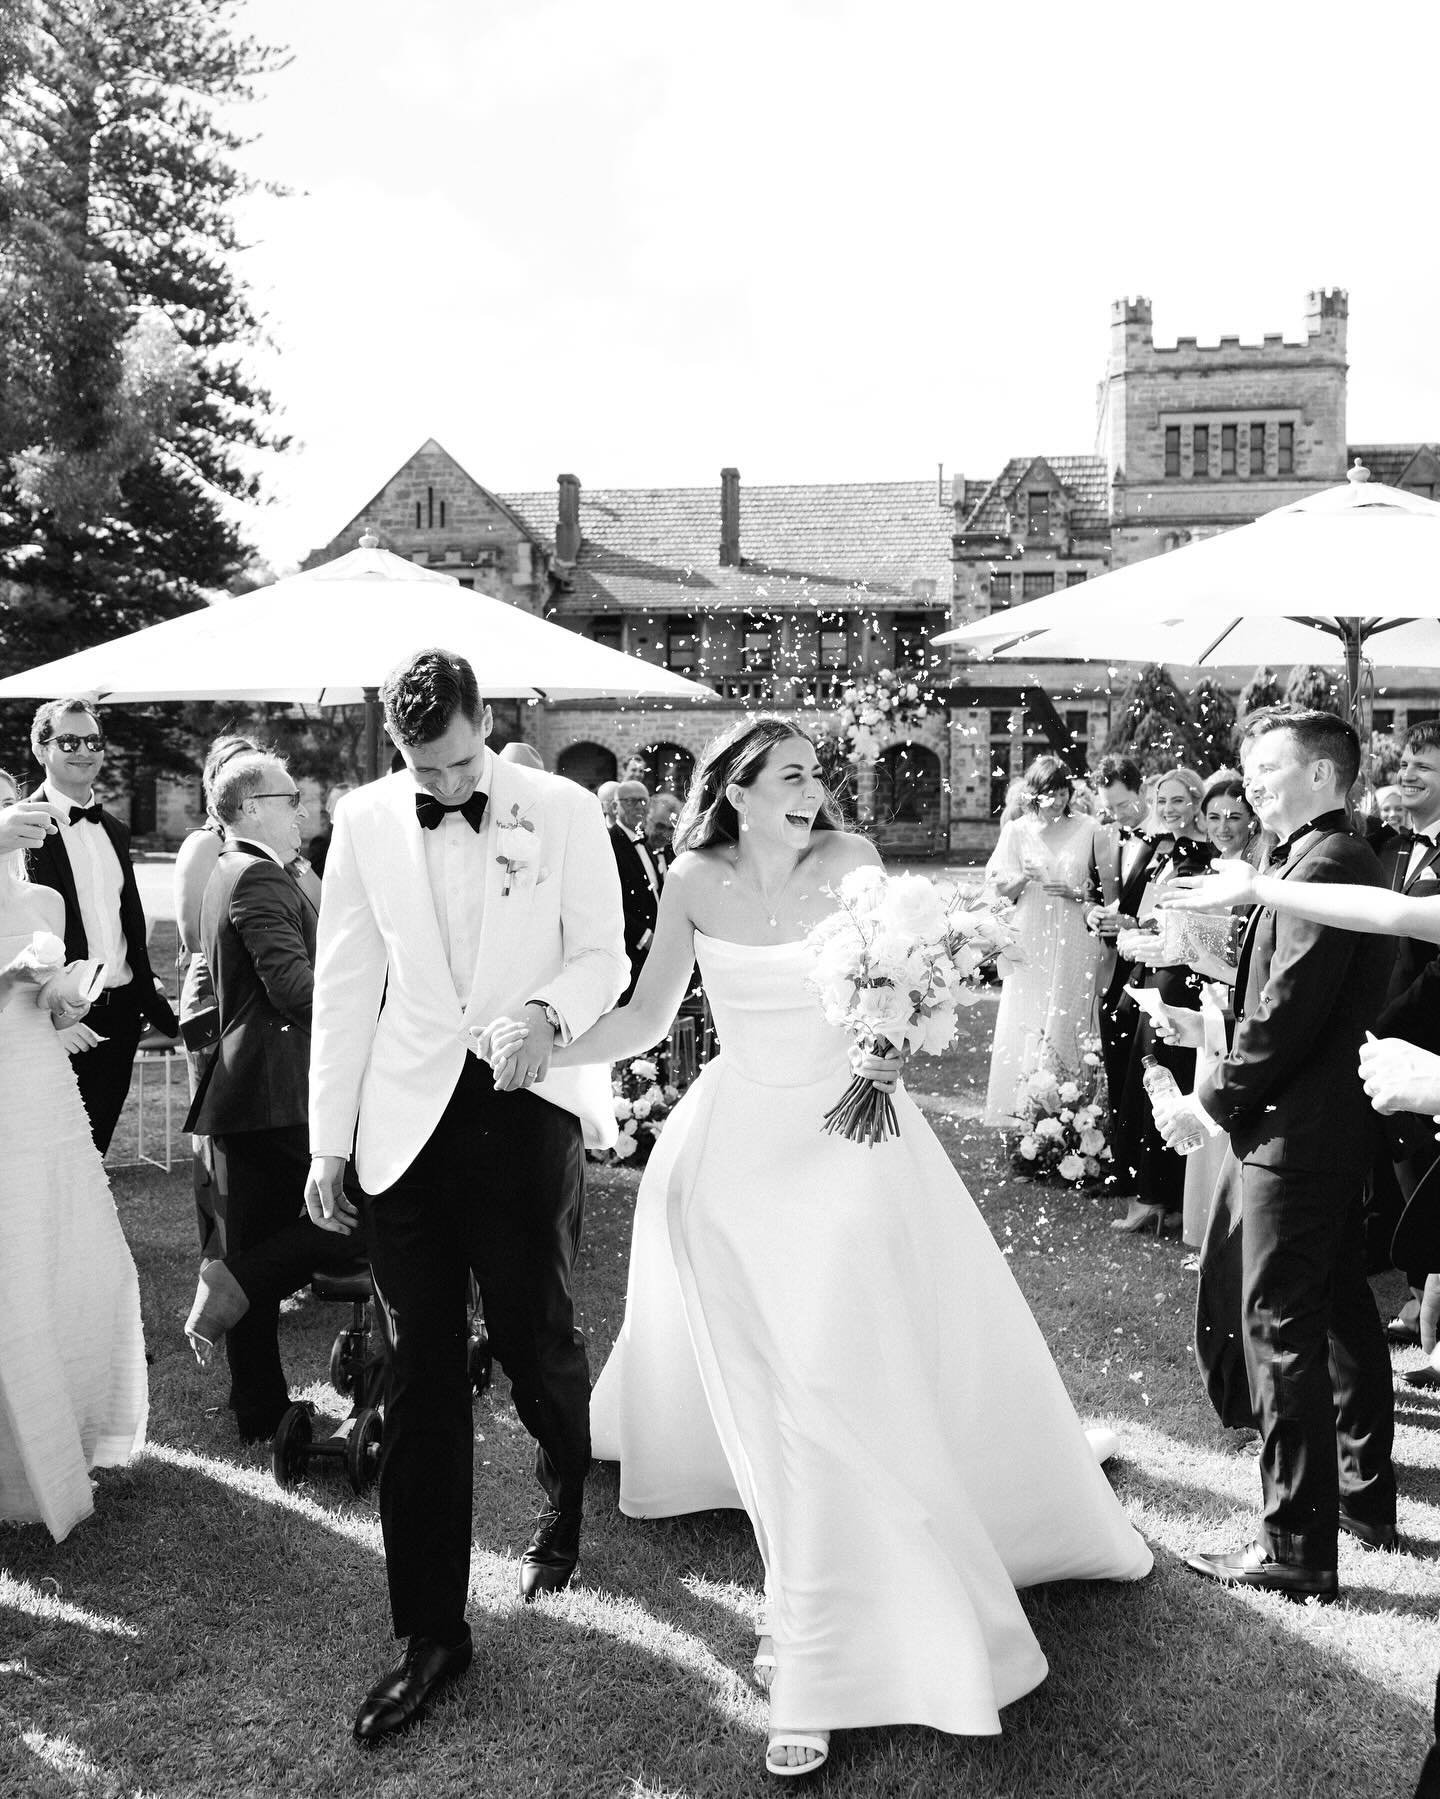 Sabrina &amp; Ryan&rsquo;s gorgeous ceremony at UWA Claremont 🤍

@sabrinadelbos 
@little.things.events 
@mapleandwren 
@chosenbykyha 
@blacklabelevent 

#weddingphotographerperth #uwawedding #weddingceremony